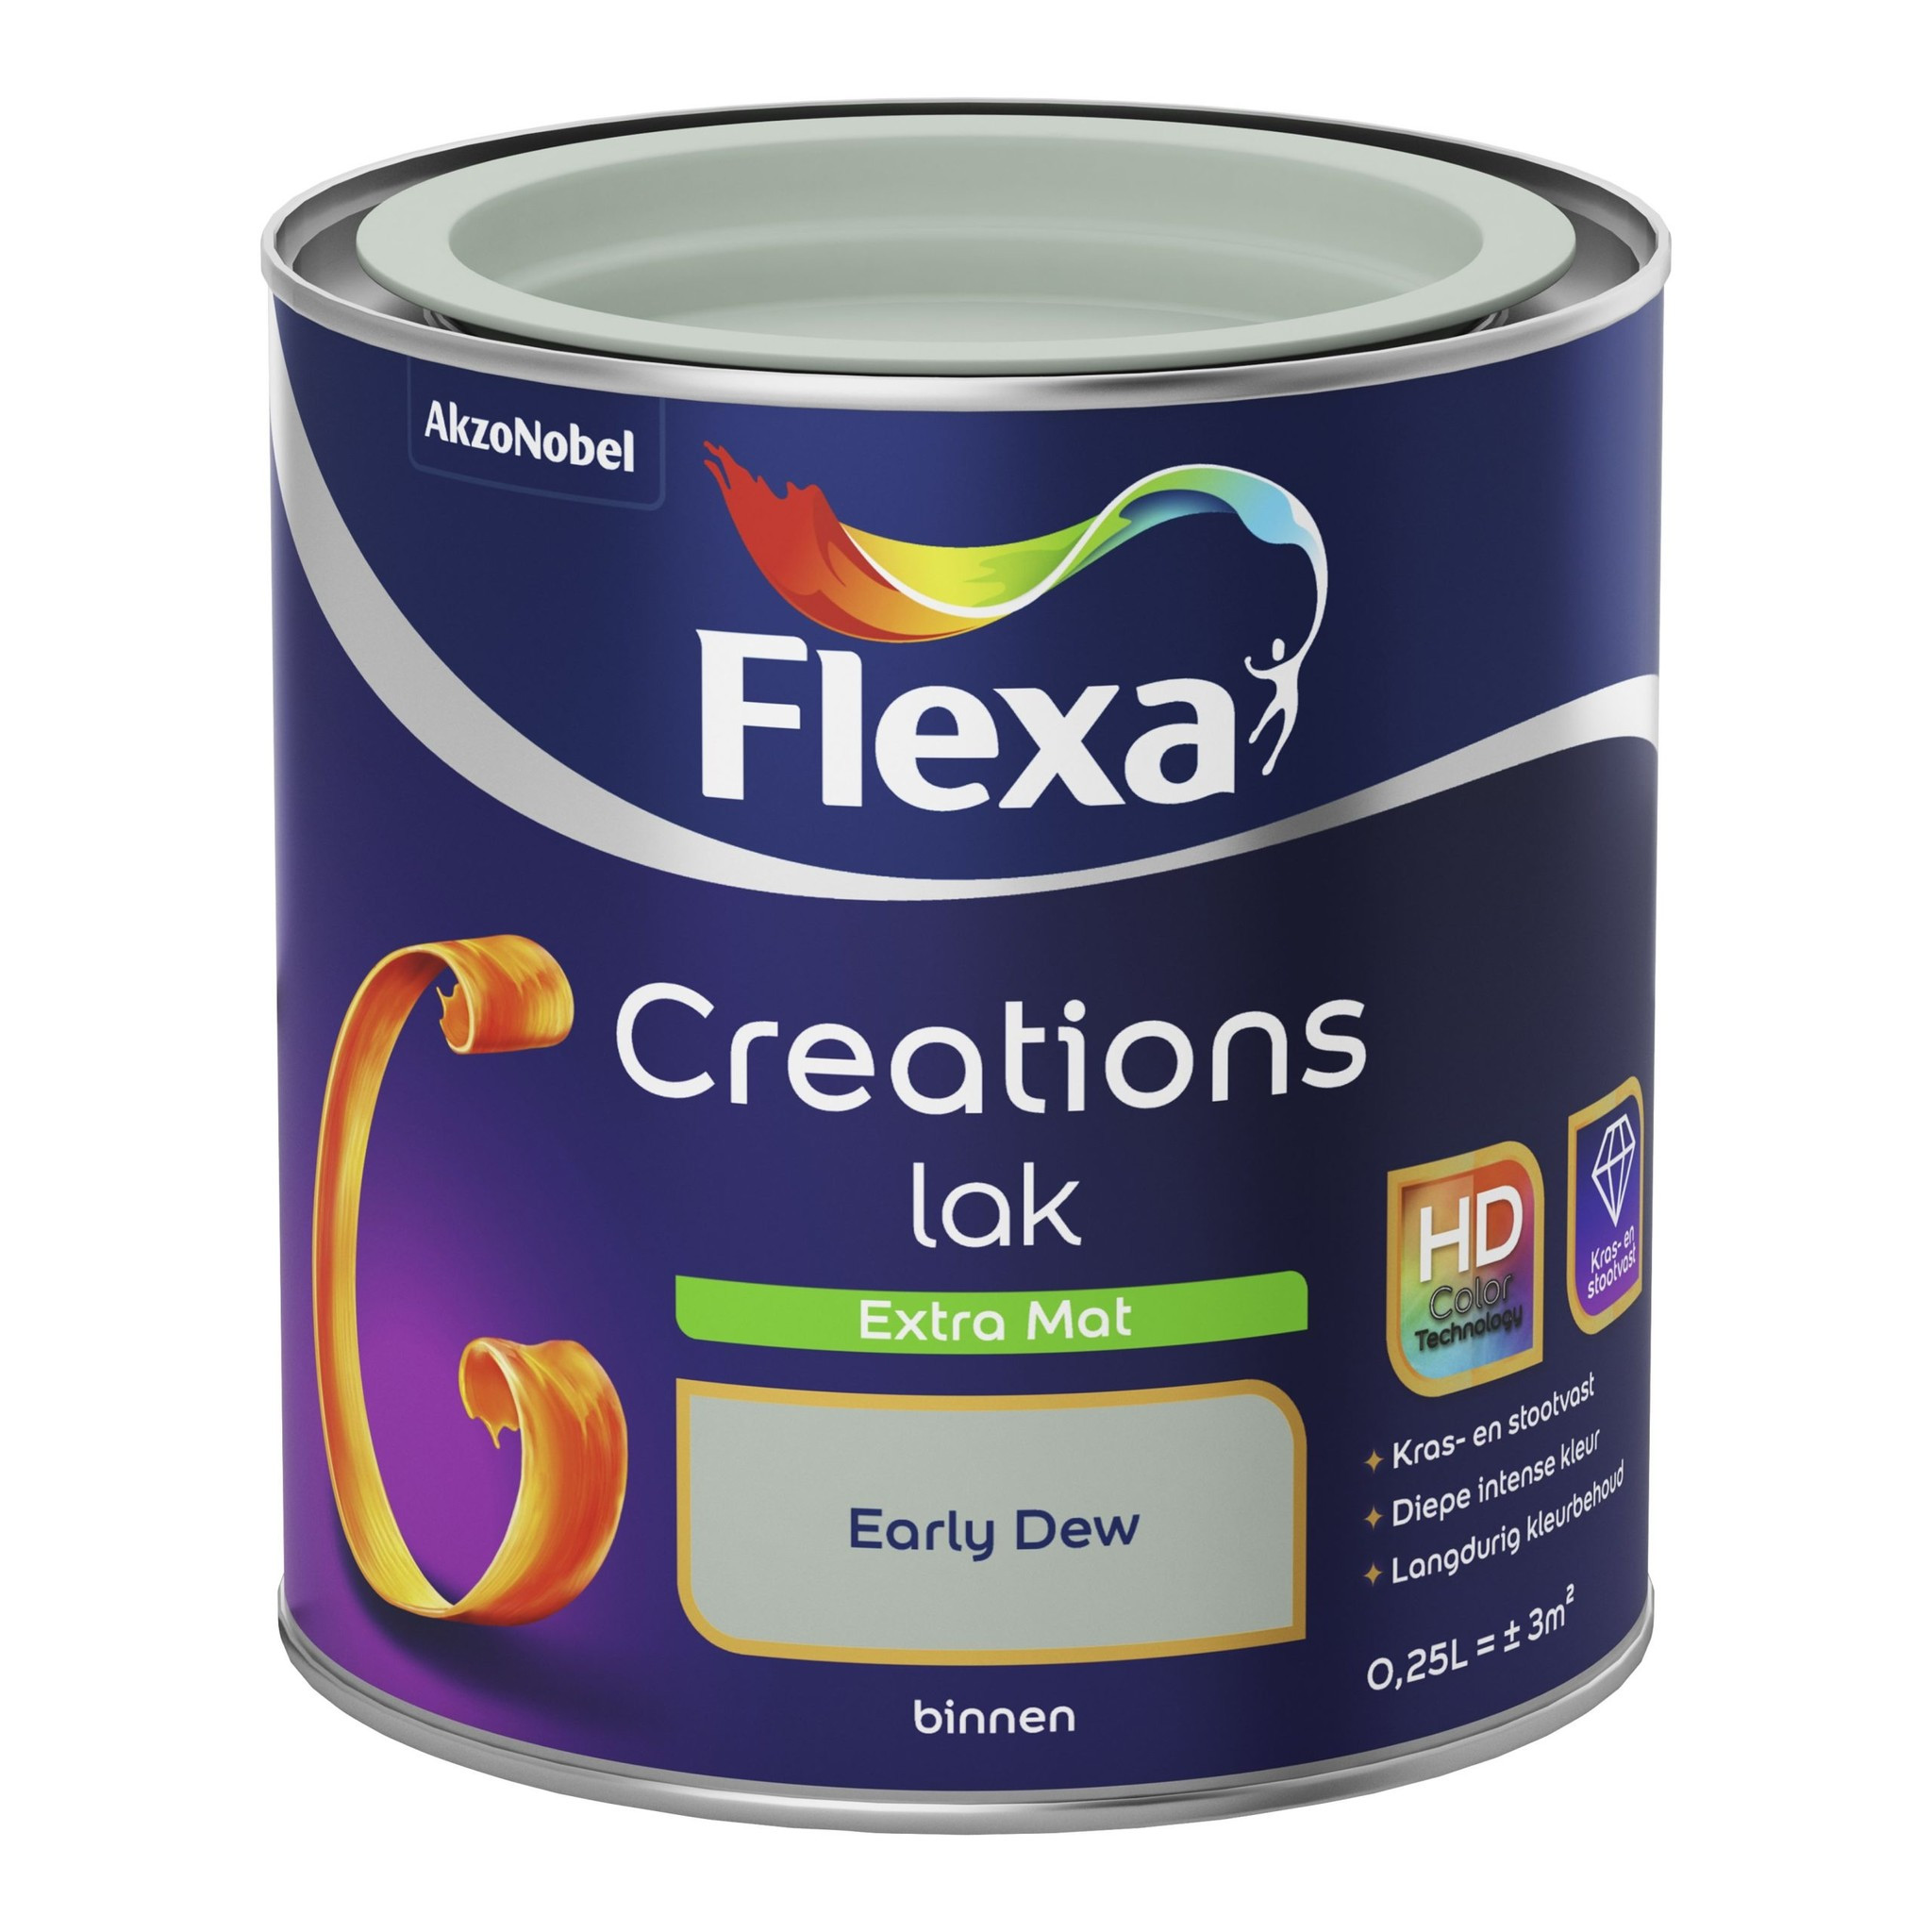 Flexa Creations Lak Extra Mat - Early Dew